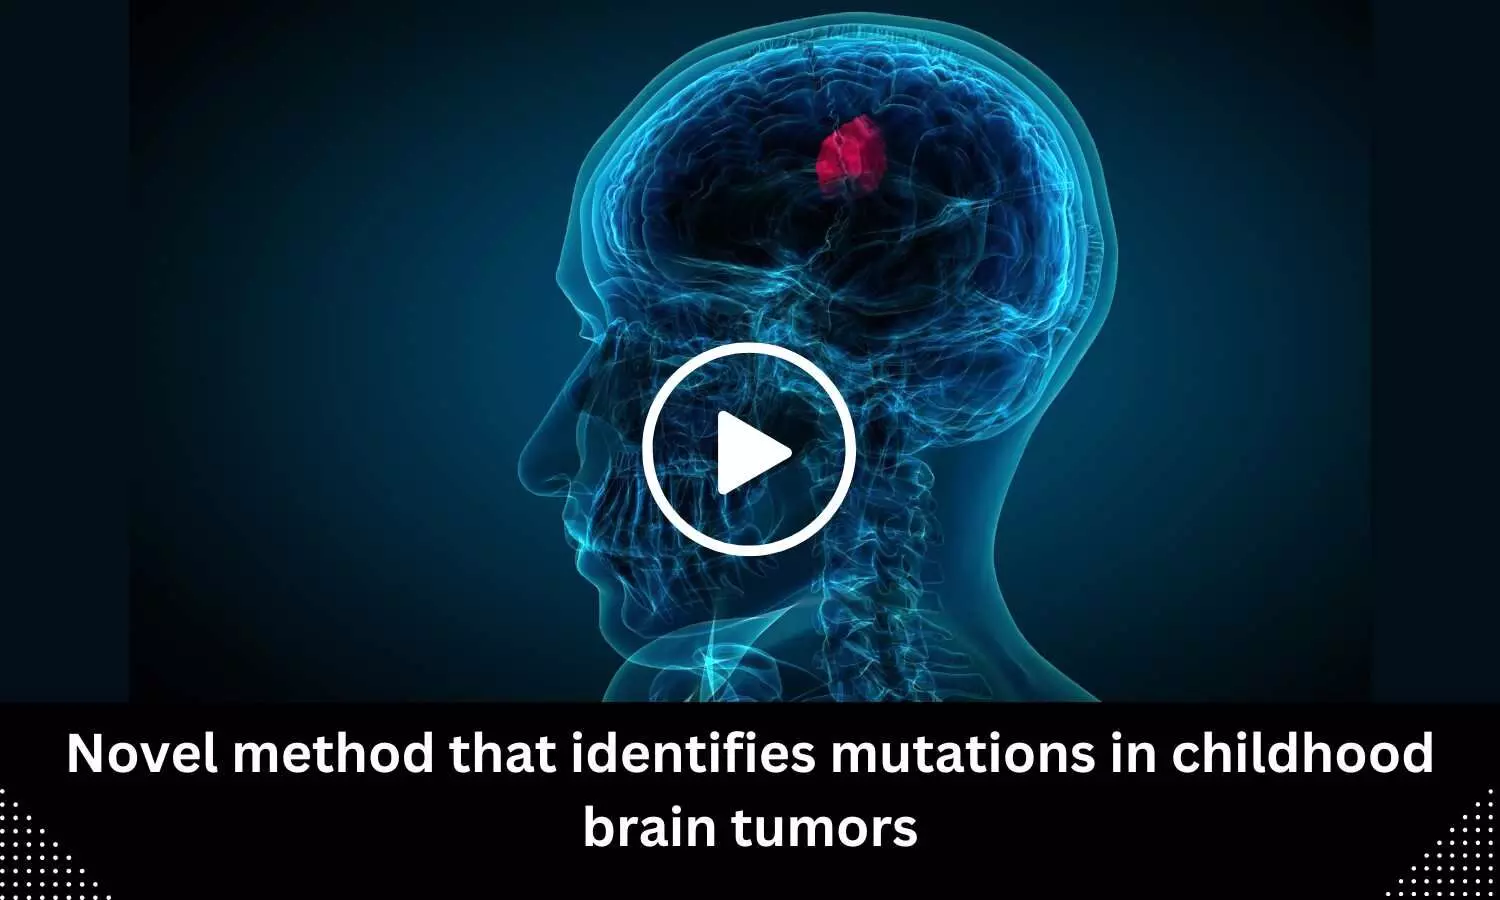 Novel method that identifies mutations in childhood brain tumors